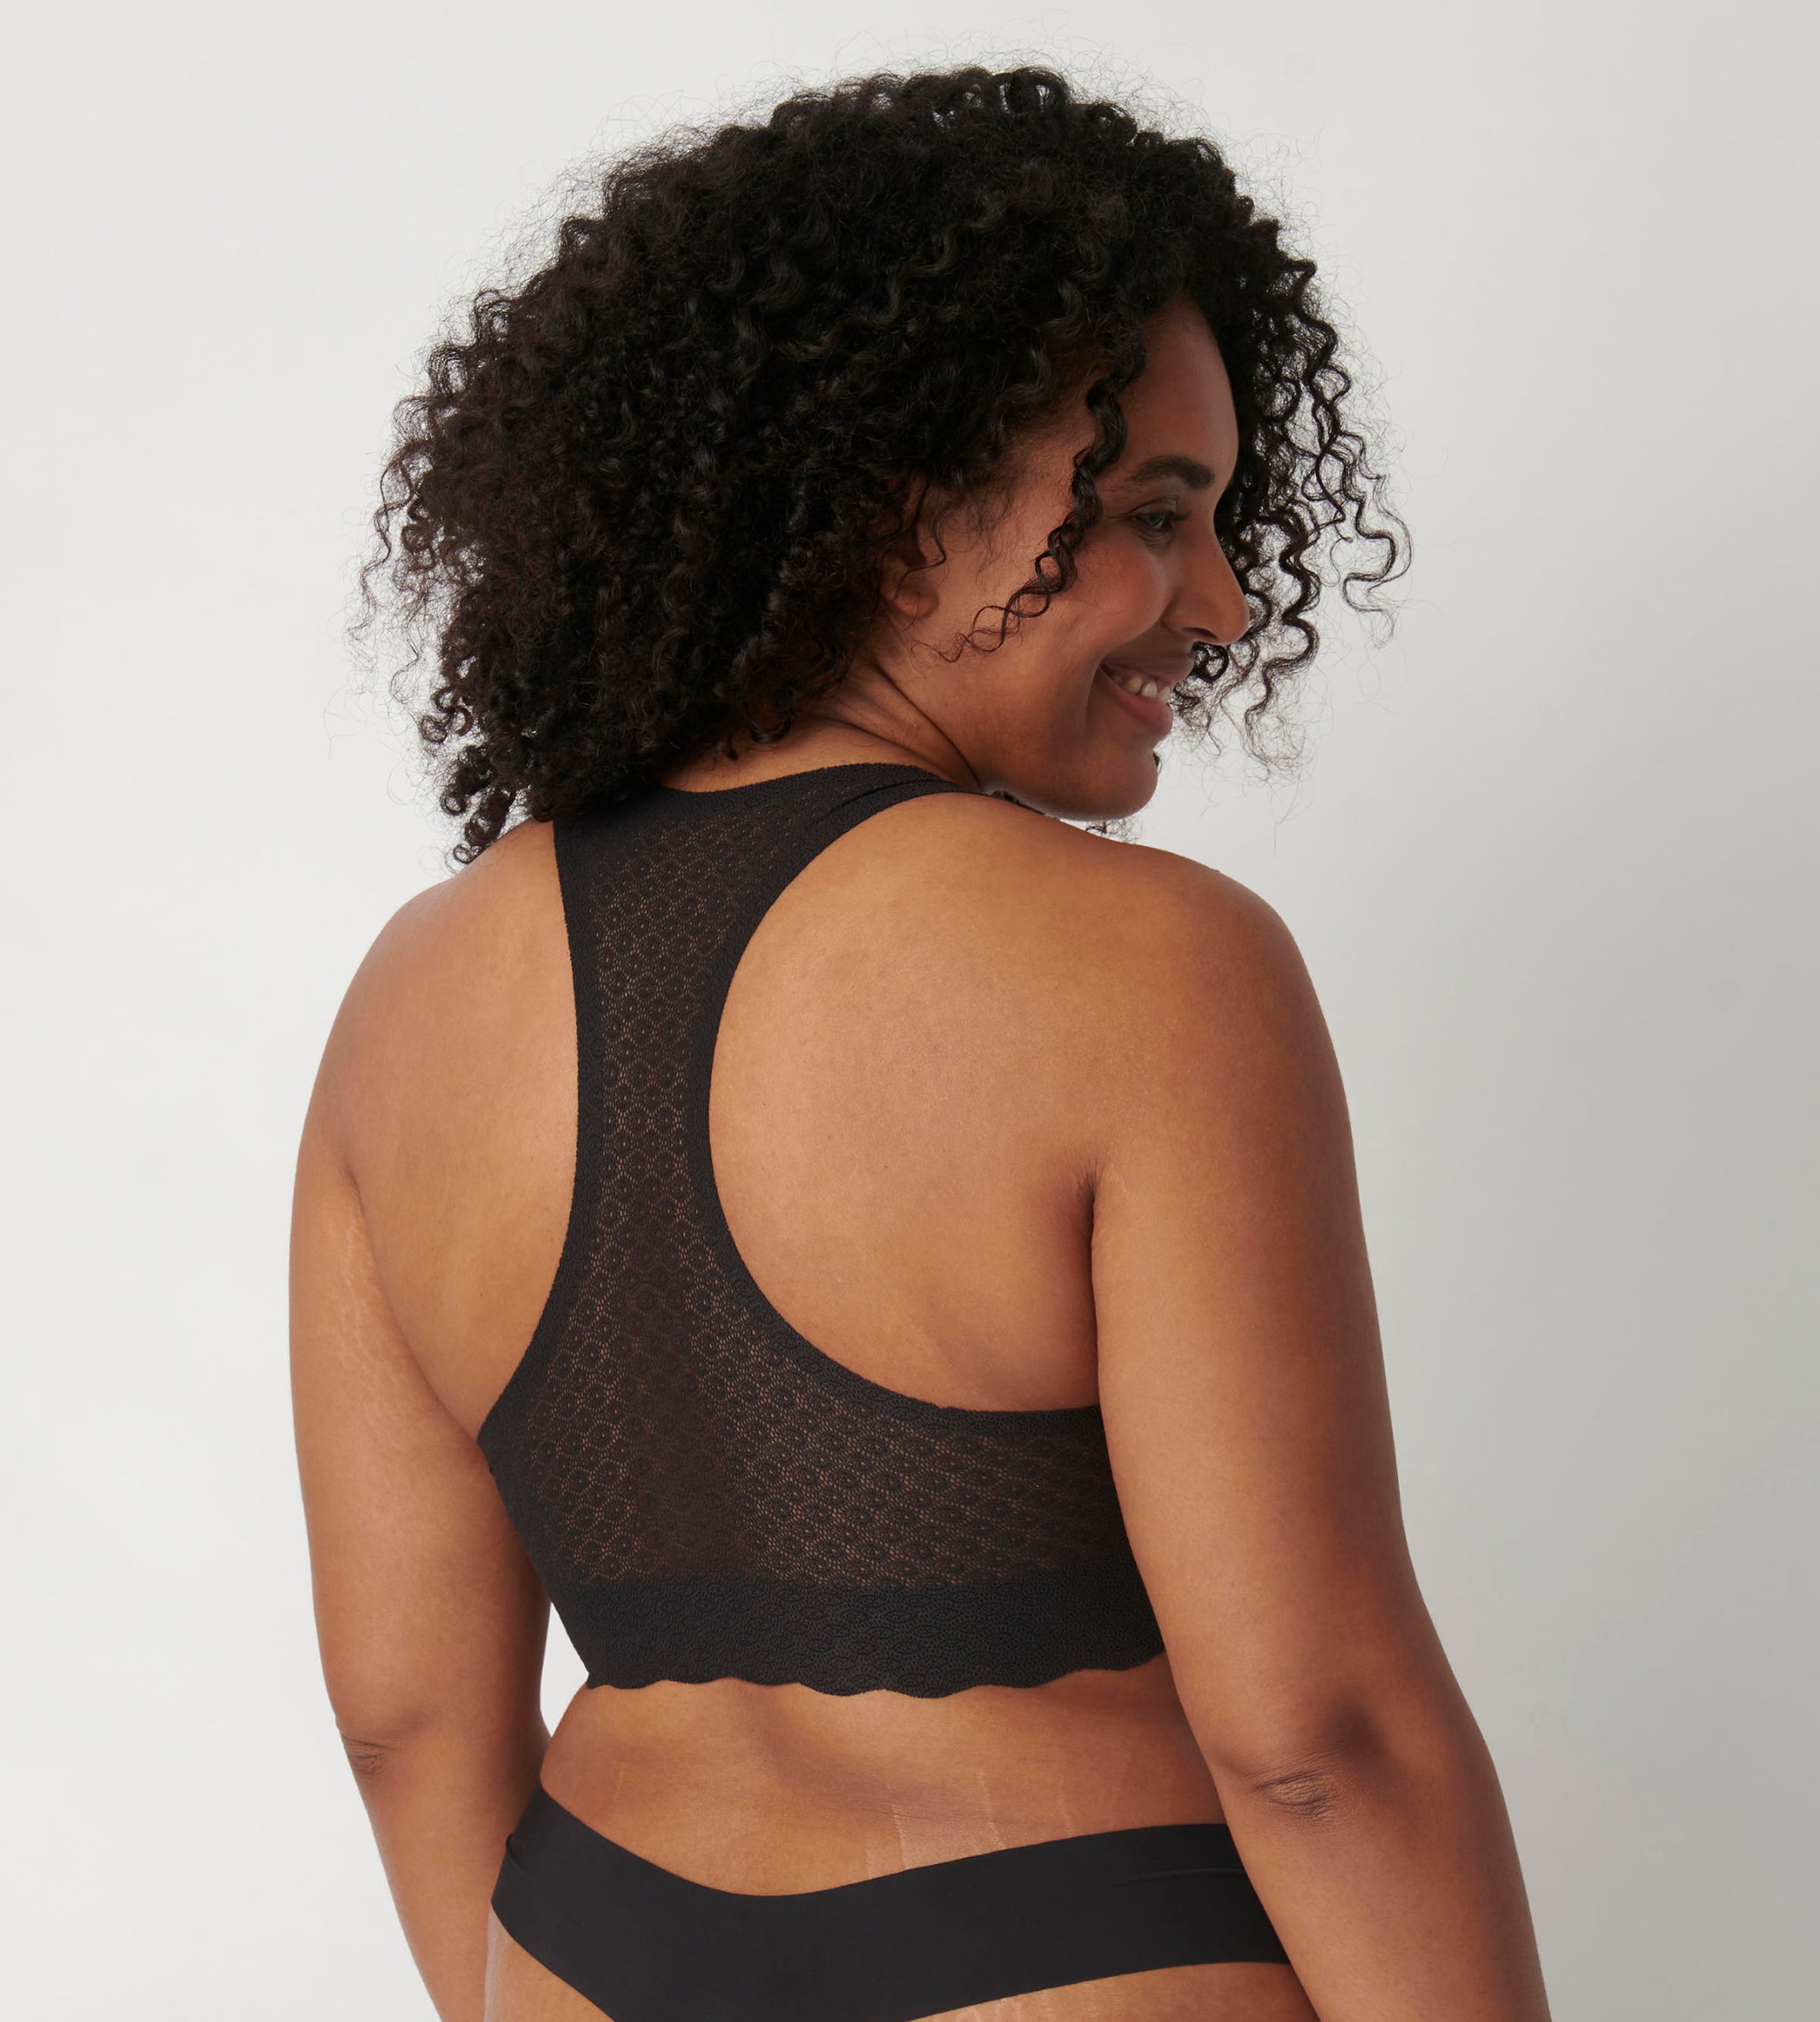 sloggi Zero Feel Lace Top - Sports bra Women's, Product Review